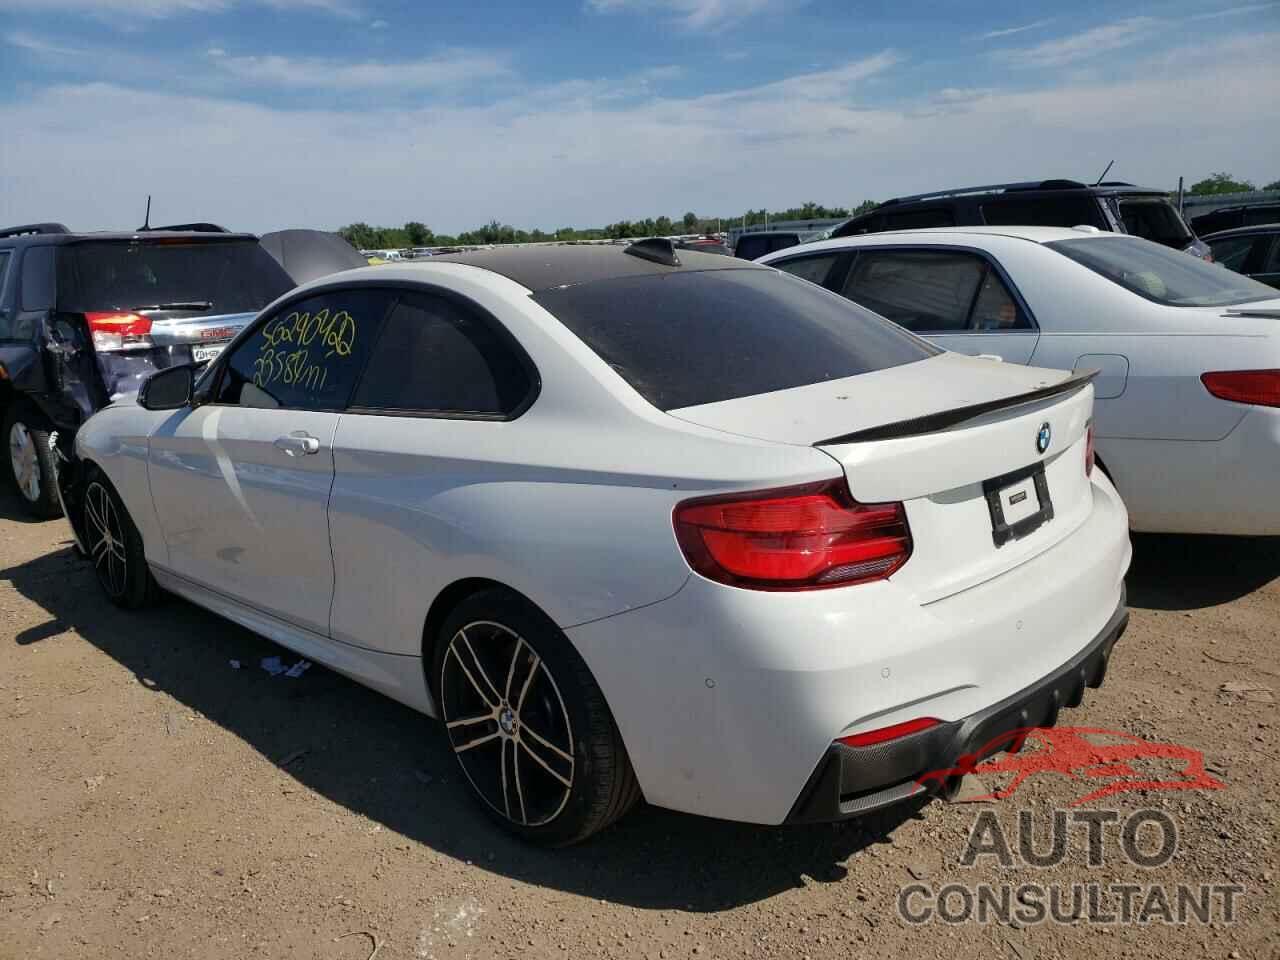 BMW M2 2018 - WBA2J7C5XJVD60595